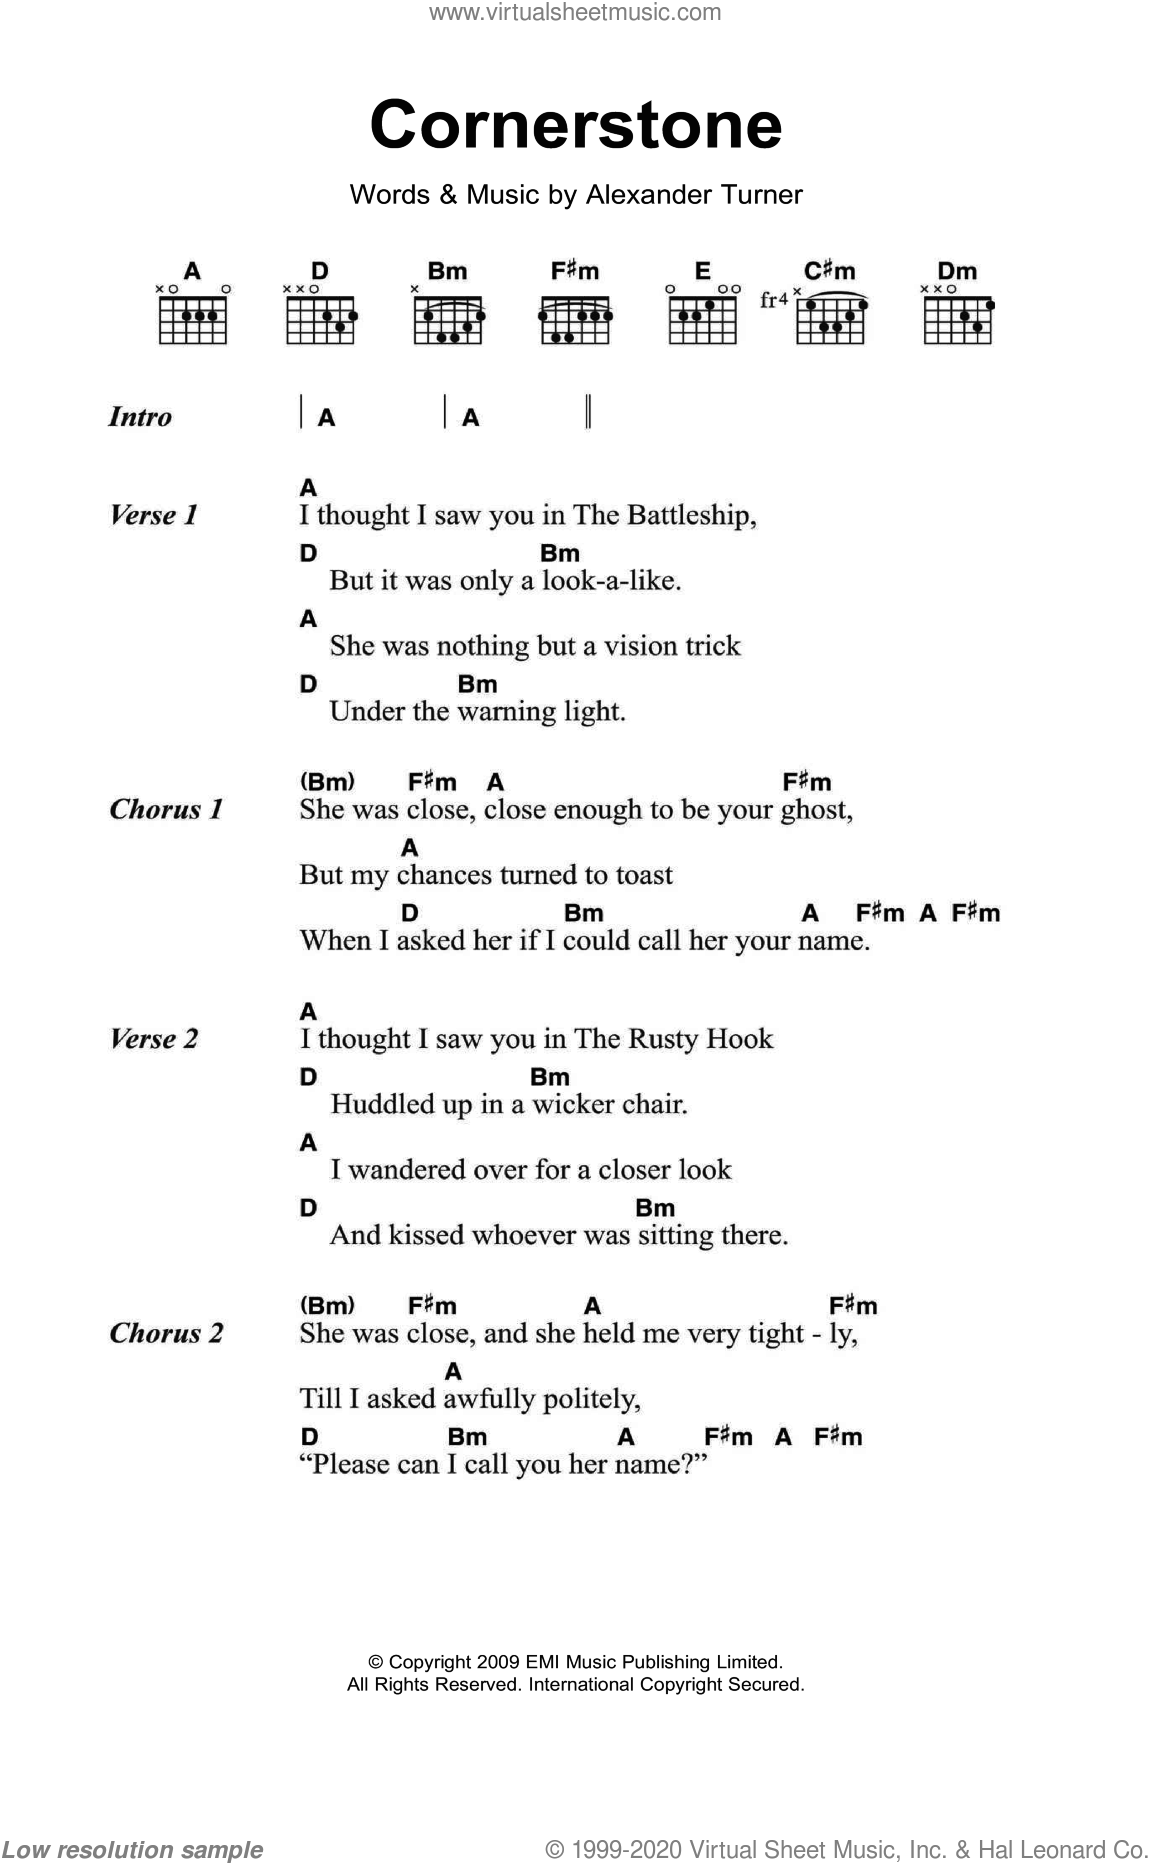 Monkeys - Cornerstone sheet music for guitar (chords) [PDF]